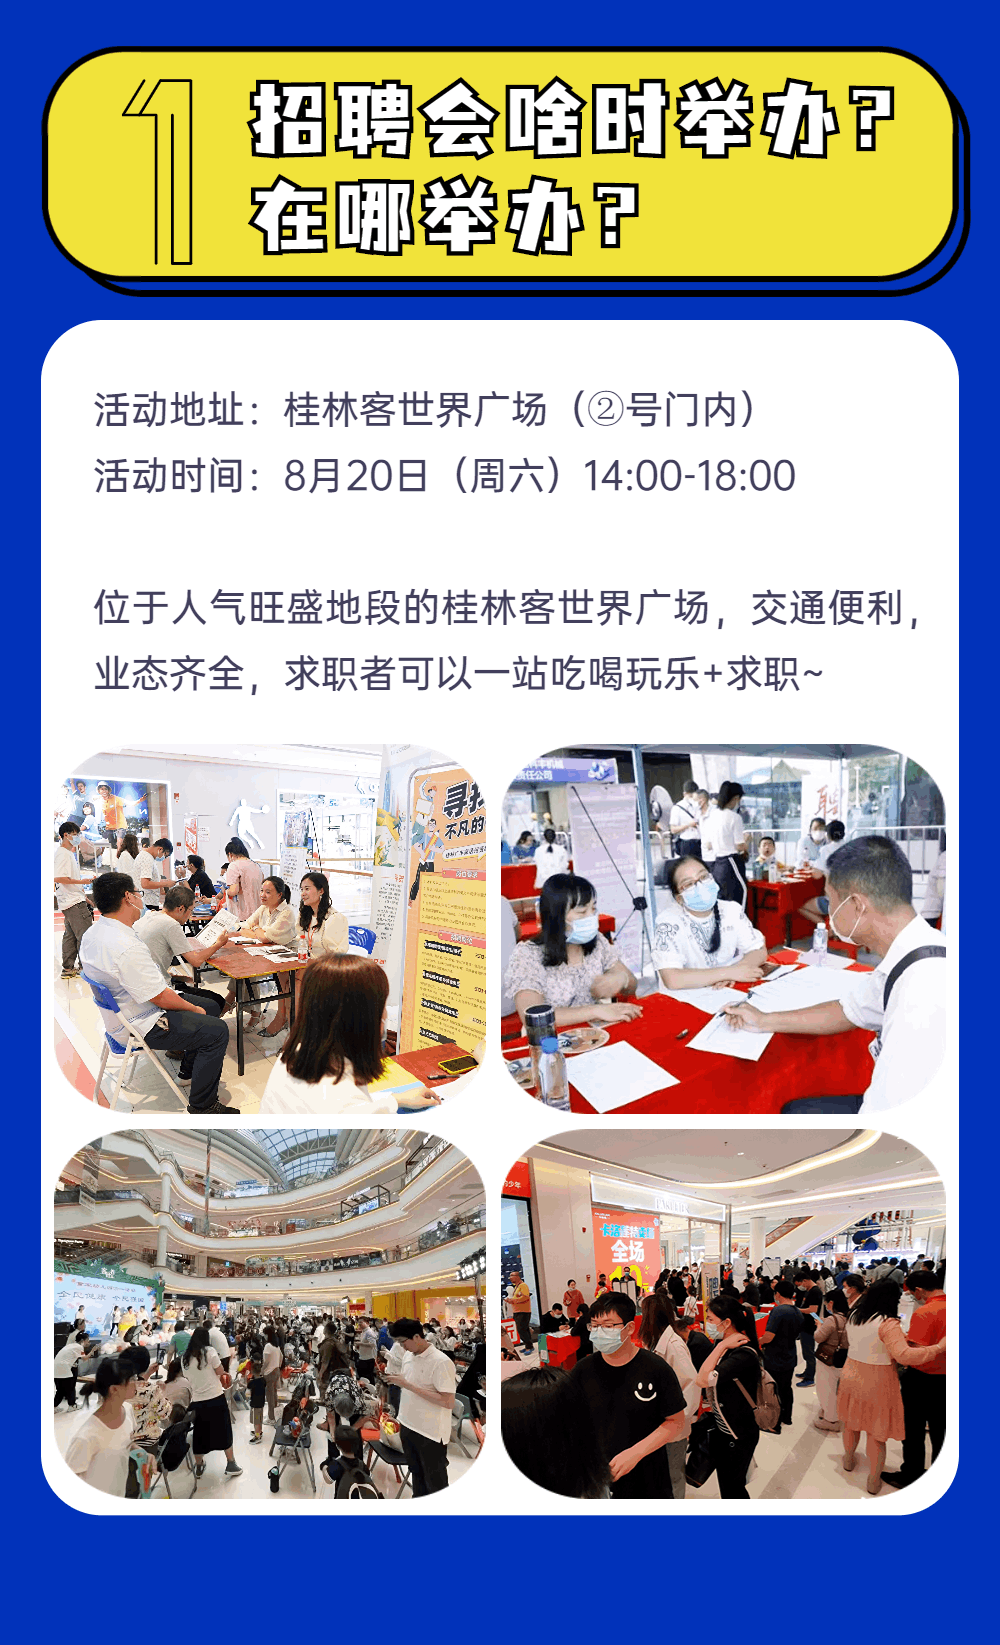 定了！就在8月20日，桂林客世界廣場！有空調的室內招聘會！這些桂林名企會參加！點我看劇透……